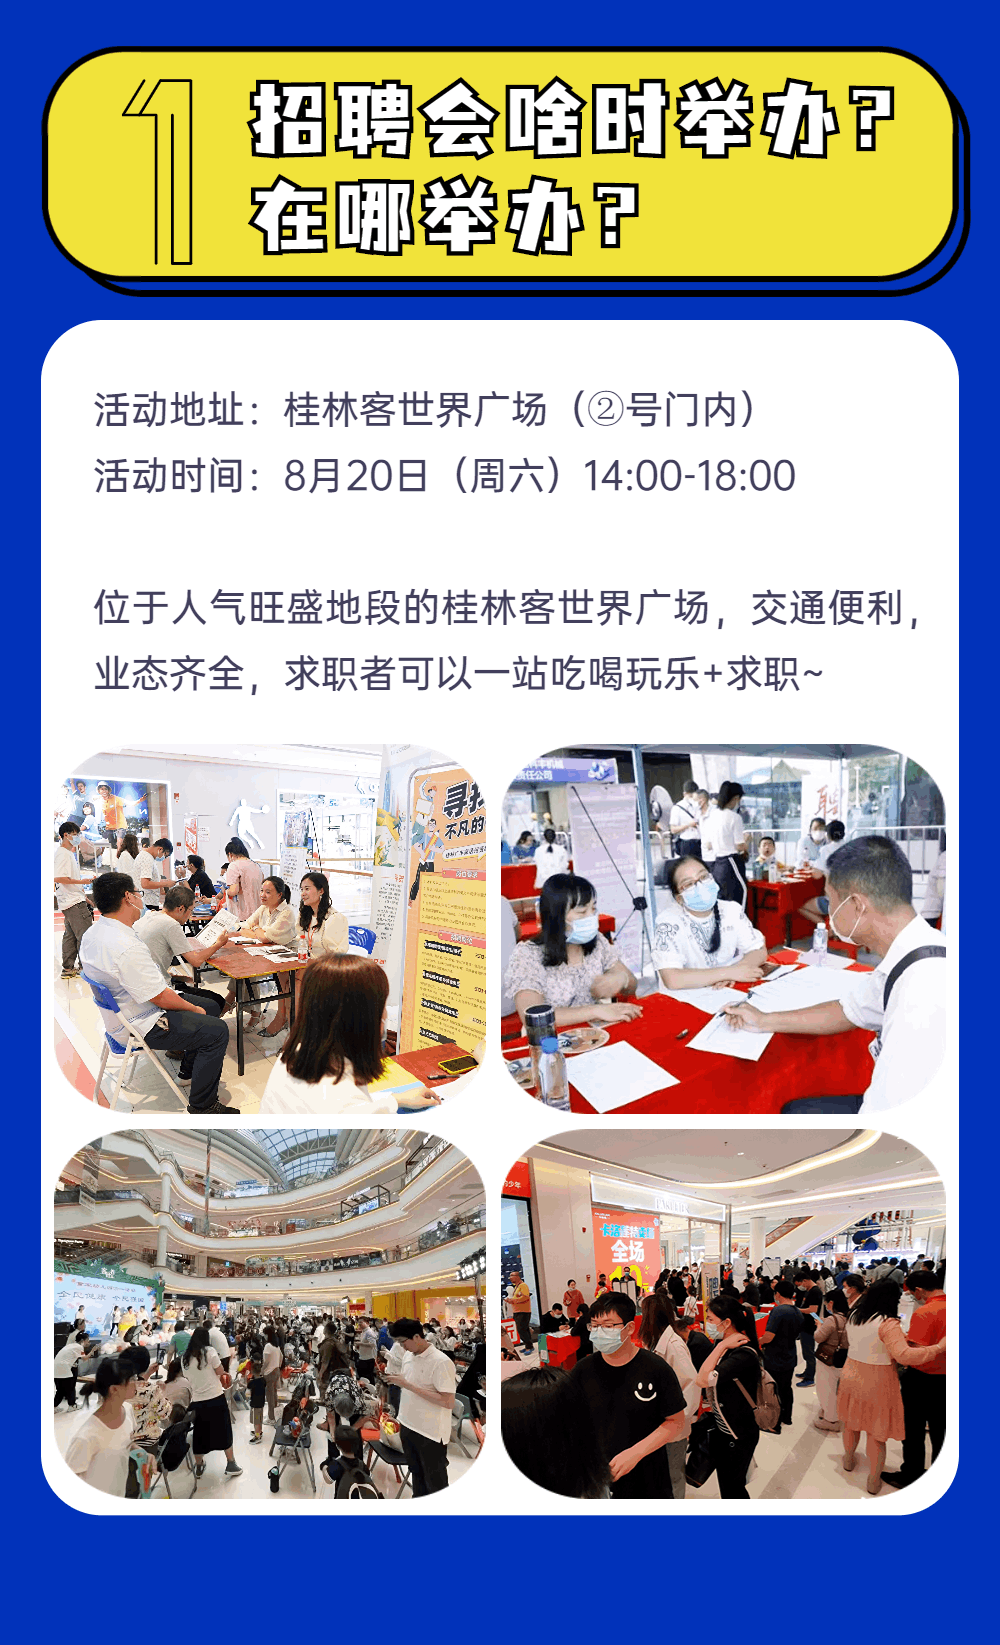 定了！就在8月20日，桂林客世界廣場！有空調的室內招聘會！這些桂林名企會參加！點我看劇透……